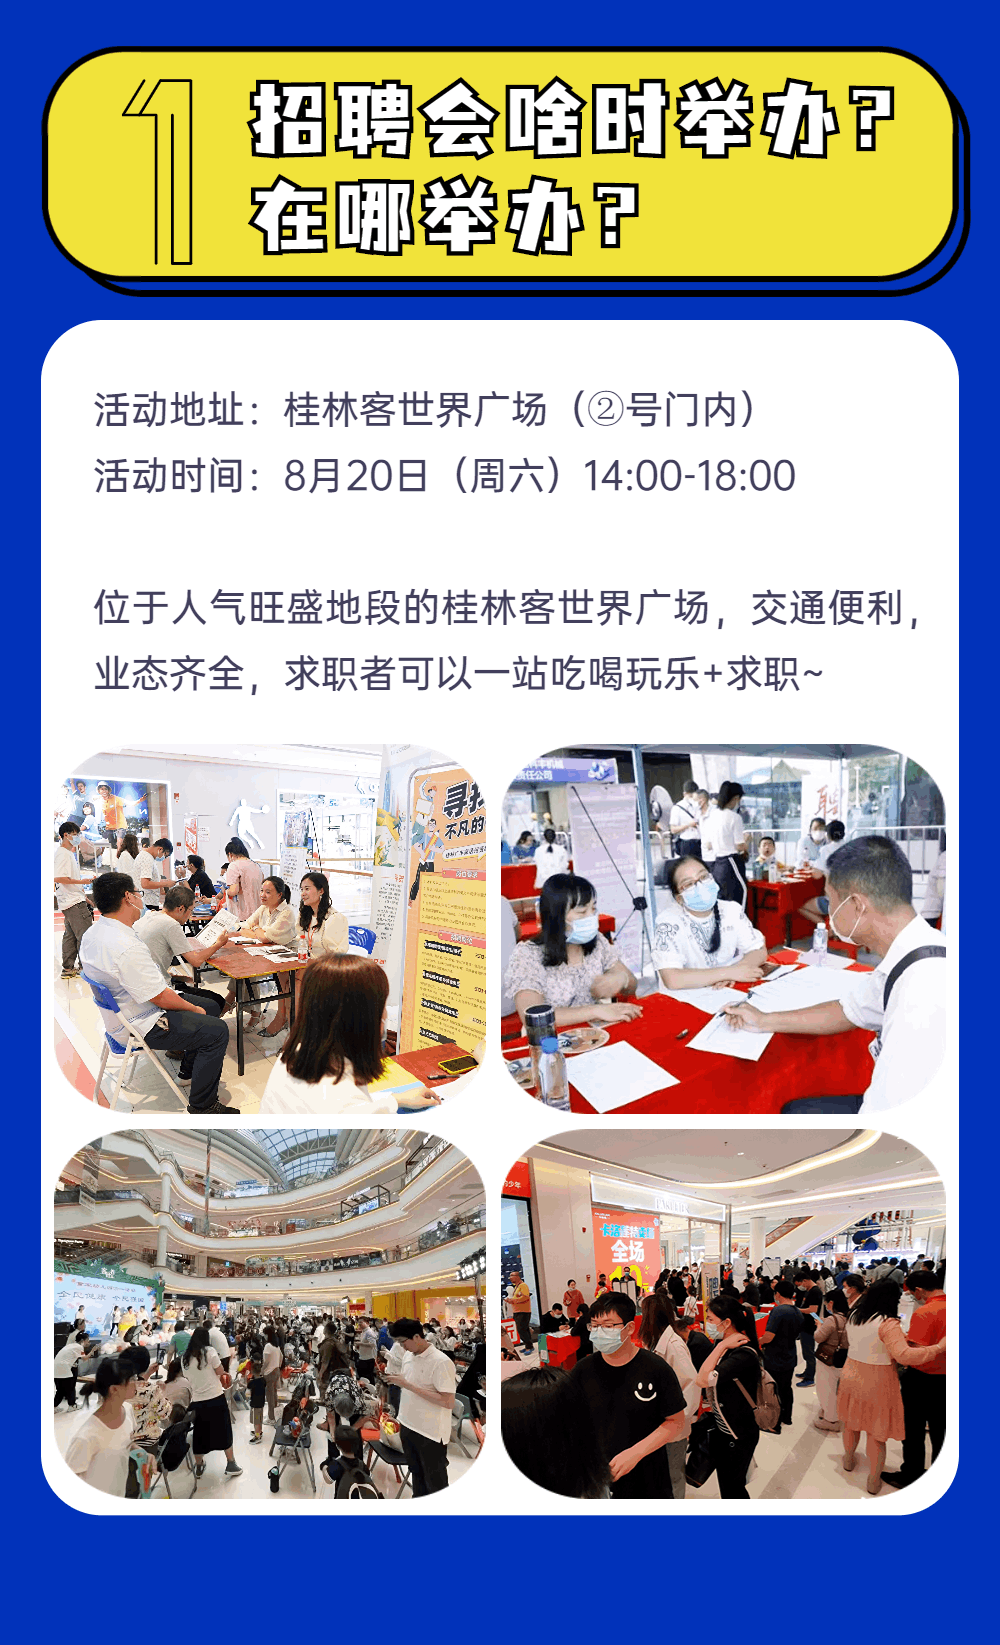 定了！就在8月20日，桂林客世界廣場！有空調的室內招聘會！這些桂林名企會參加！點我看劇透……